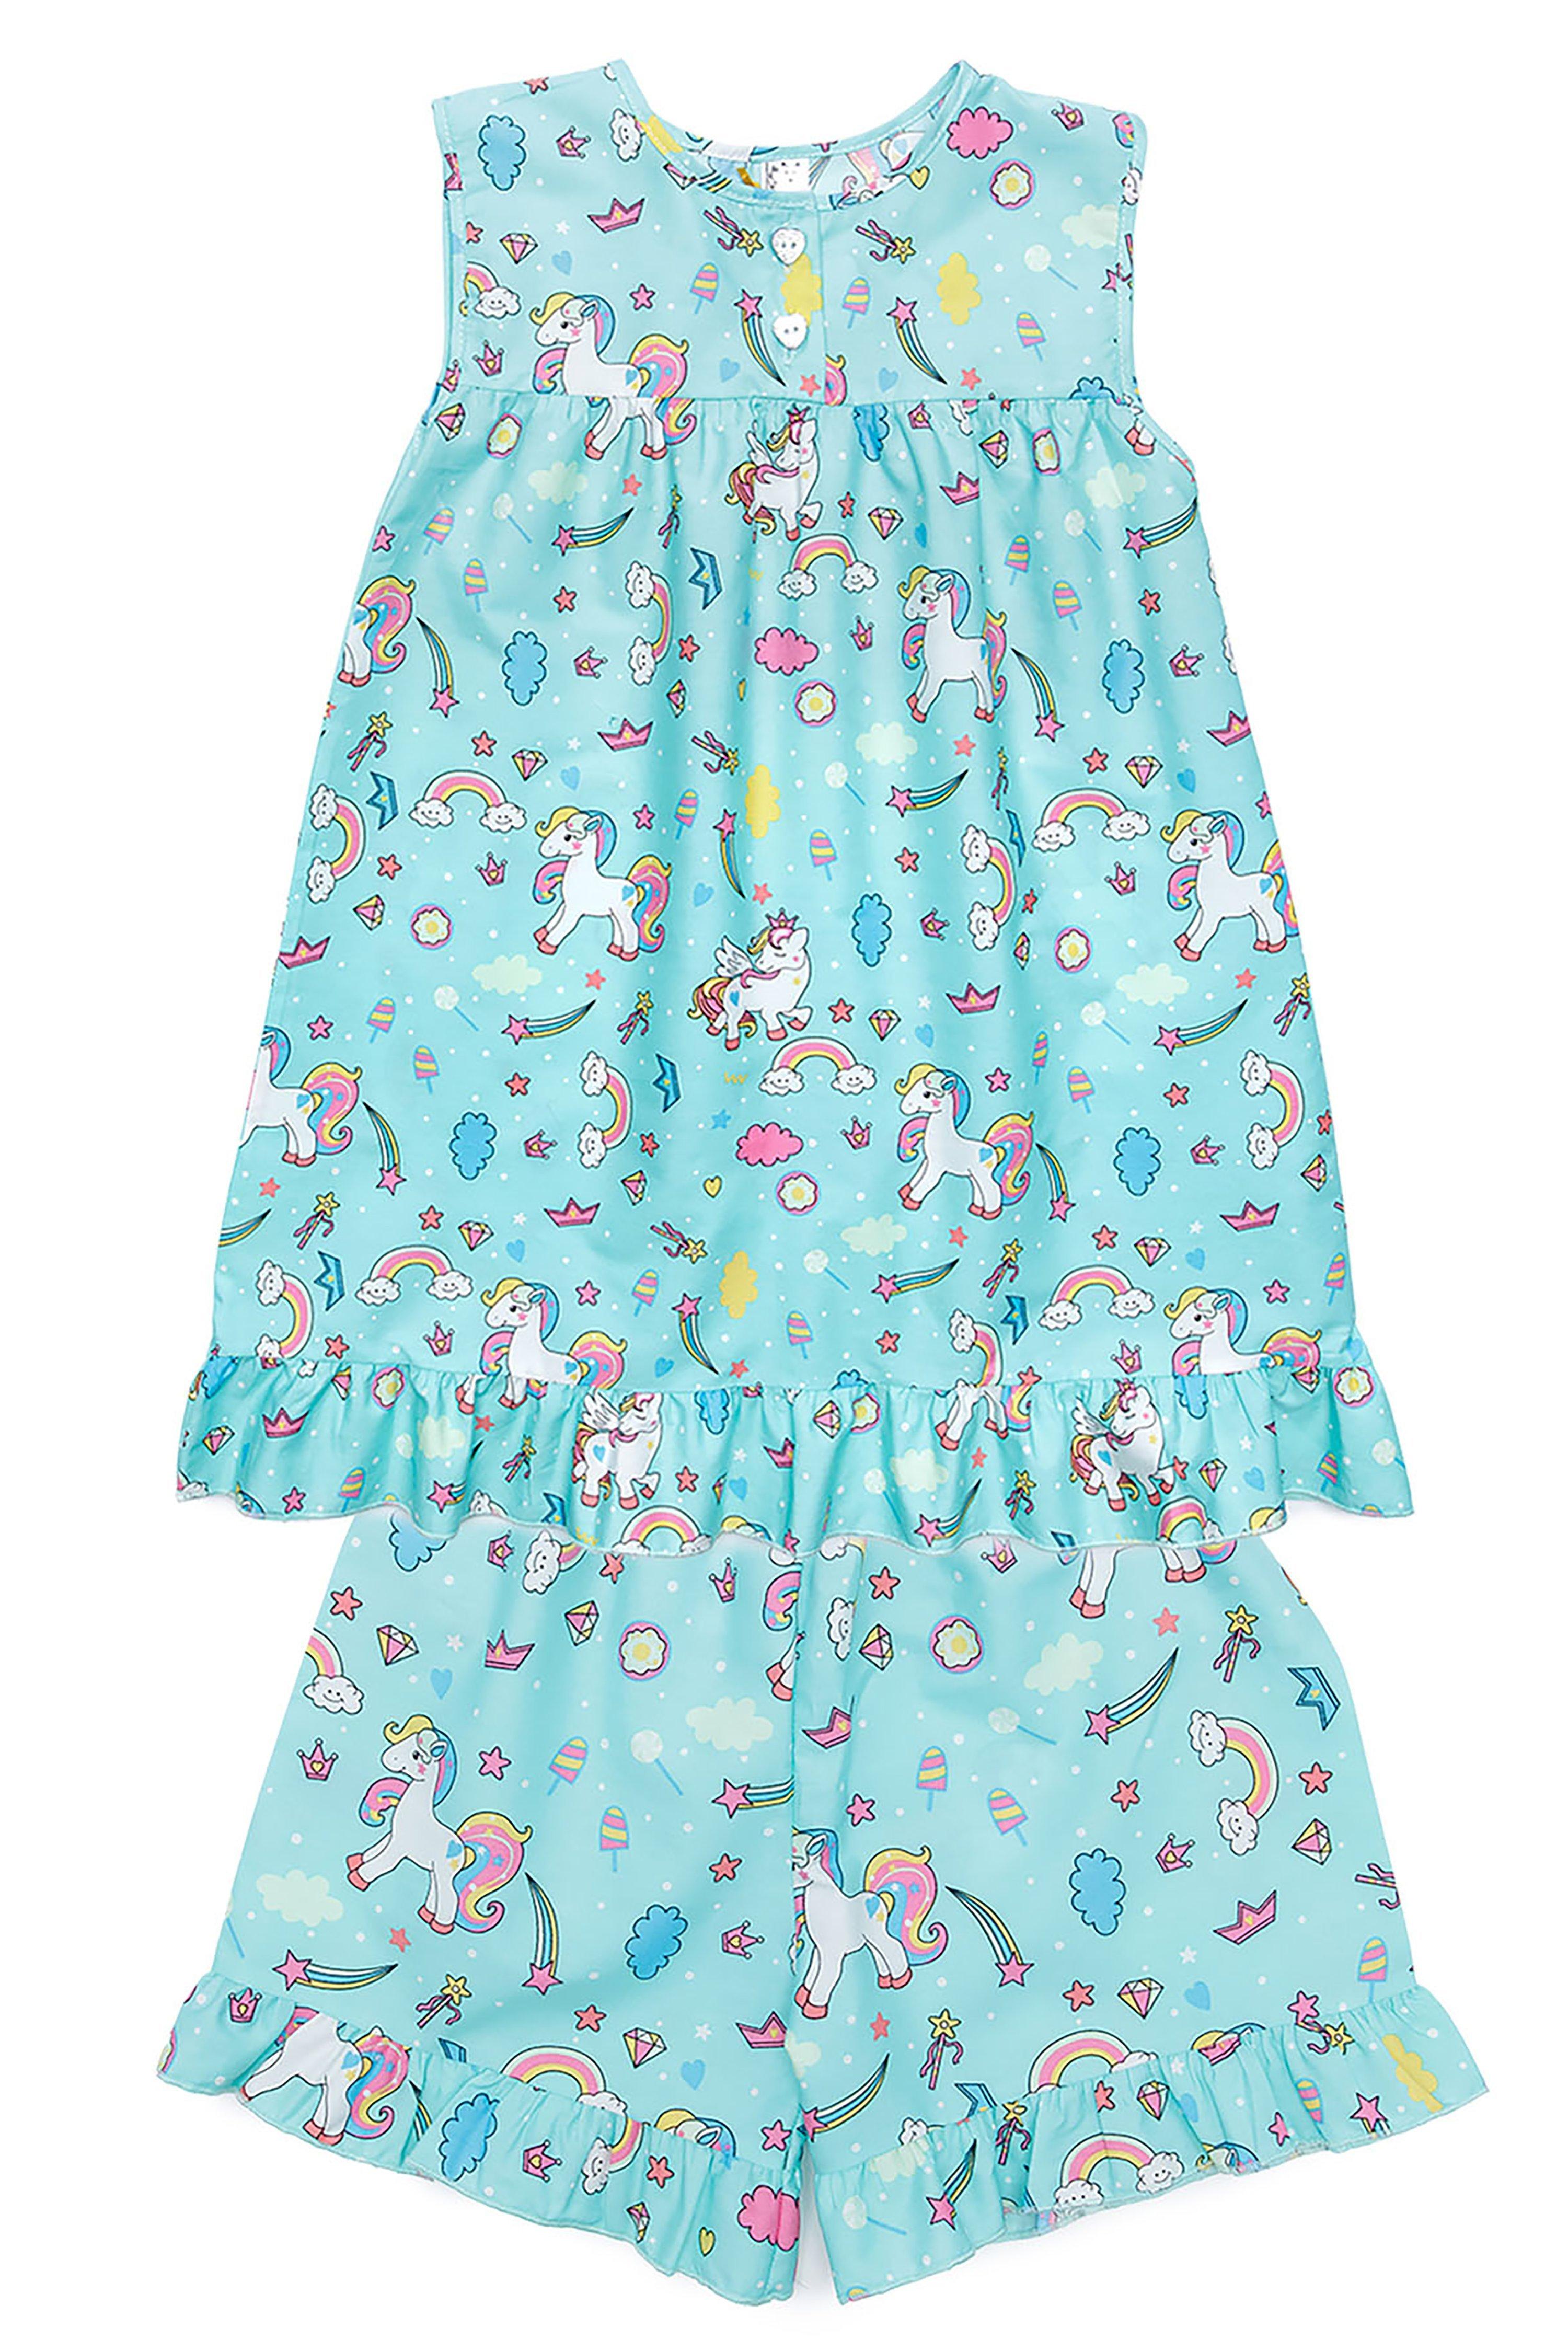 Magical Pony Cotton Short Pyjama Set